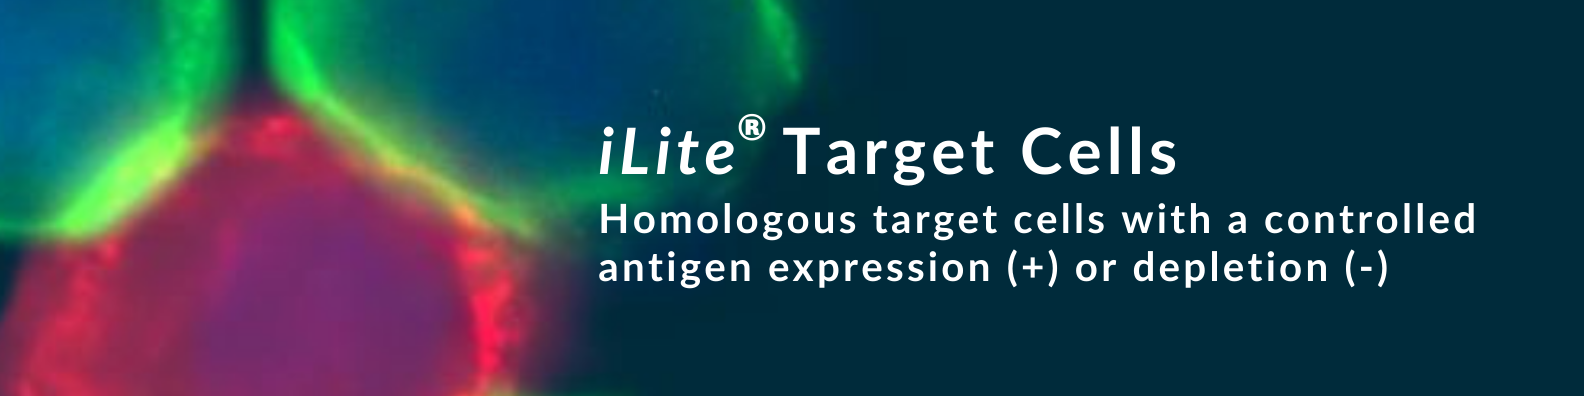 iLite Target Cells